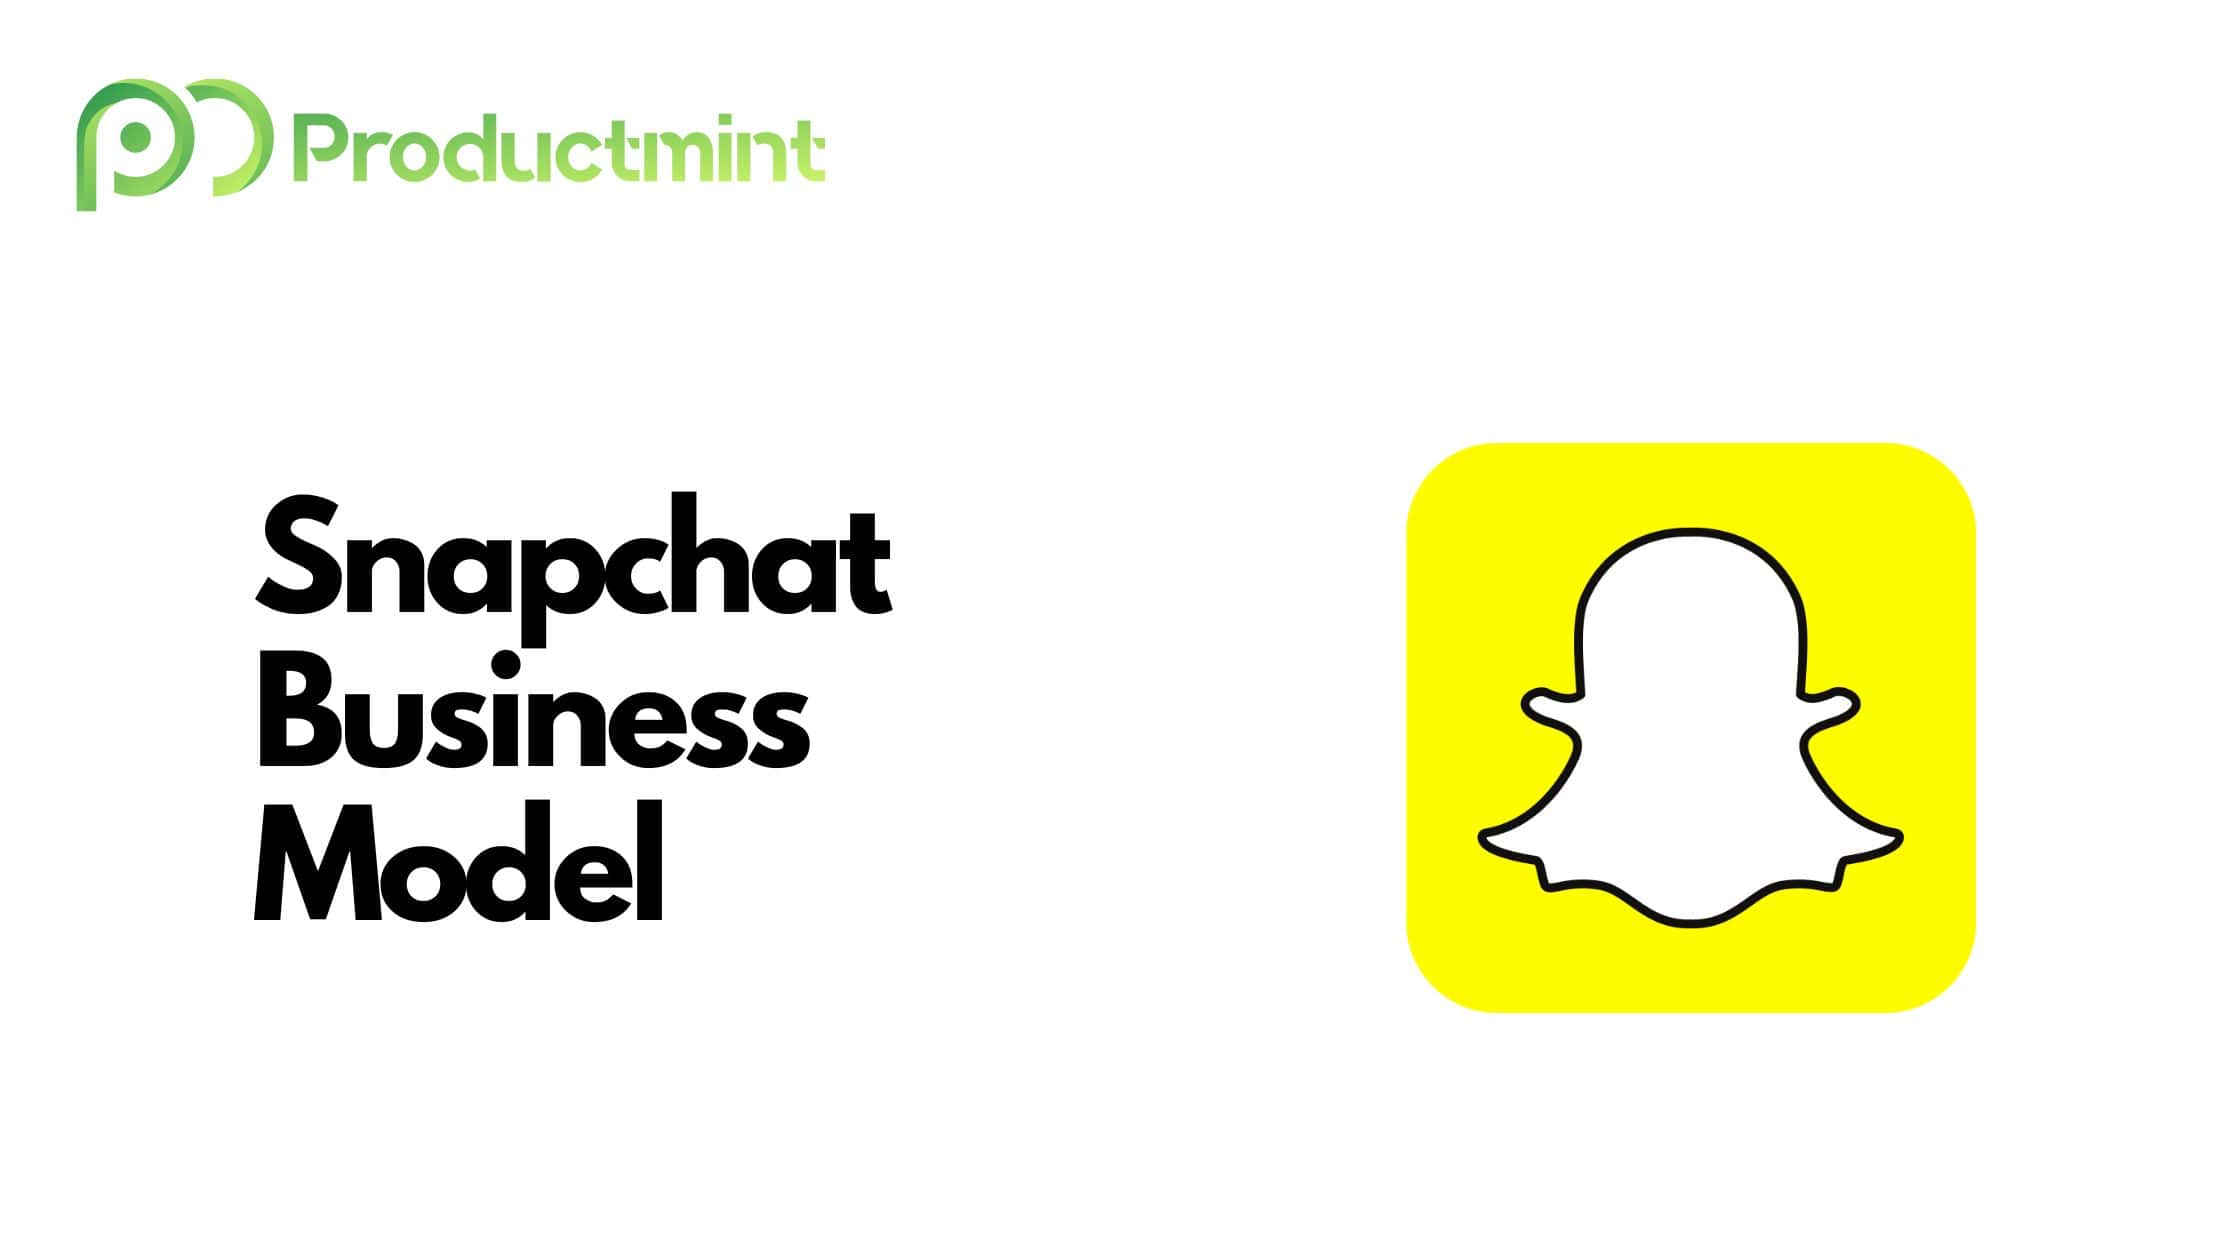 Snapchat Business Model